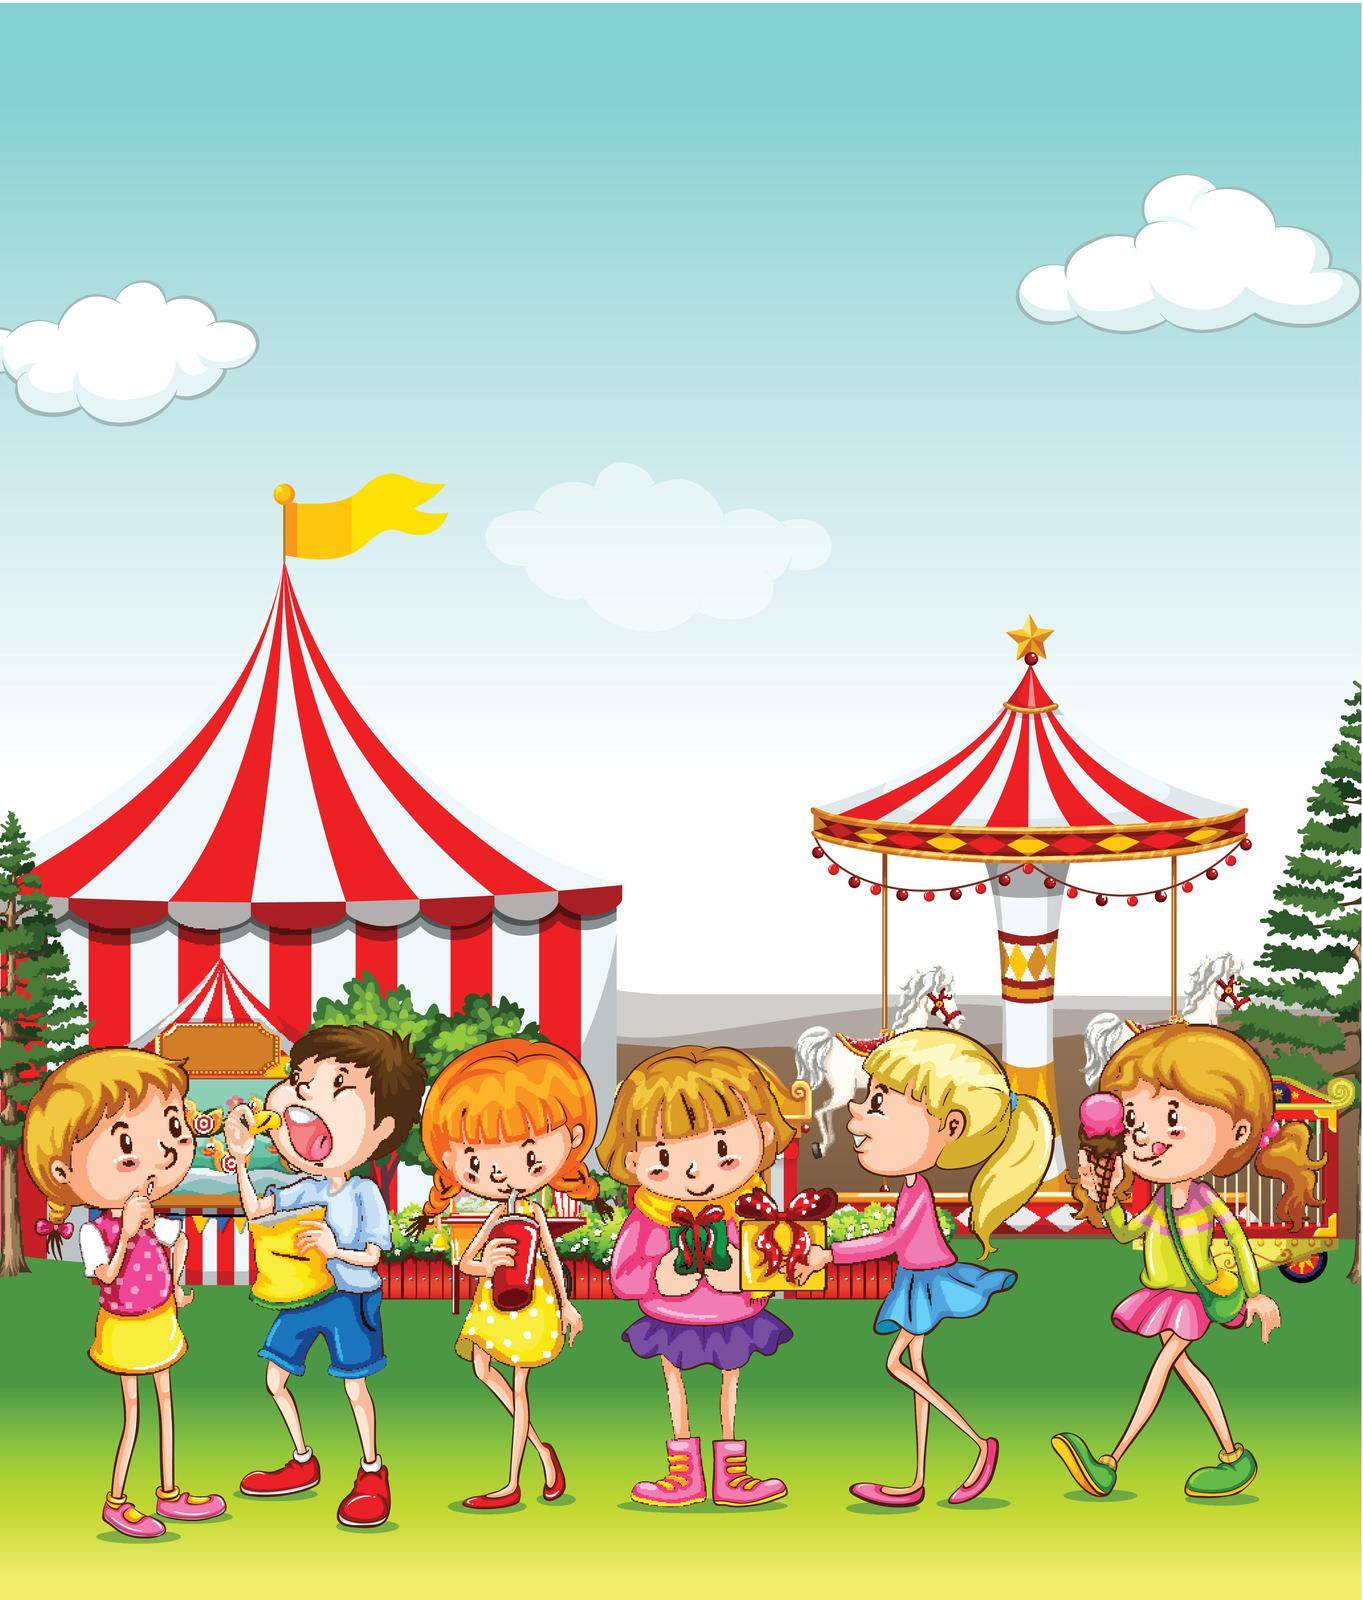 Children having fun at the amusement park illustration